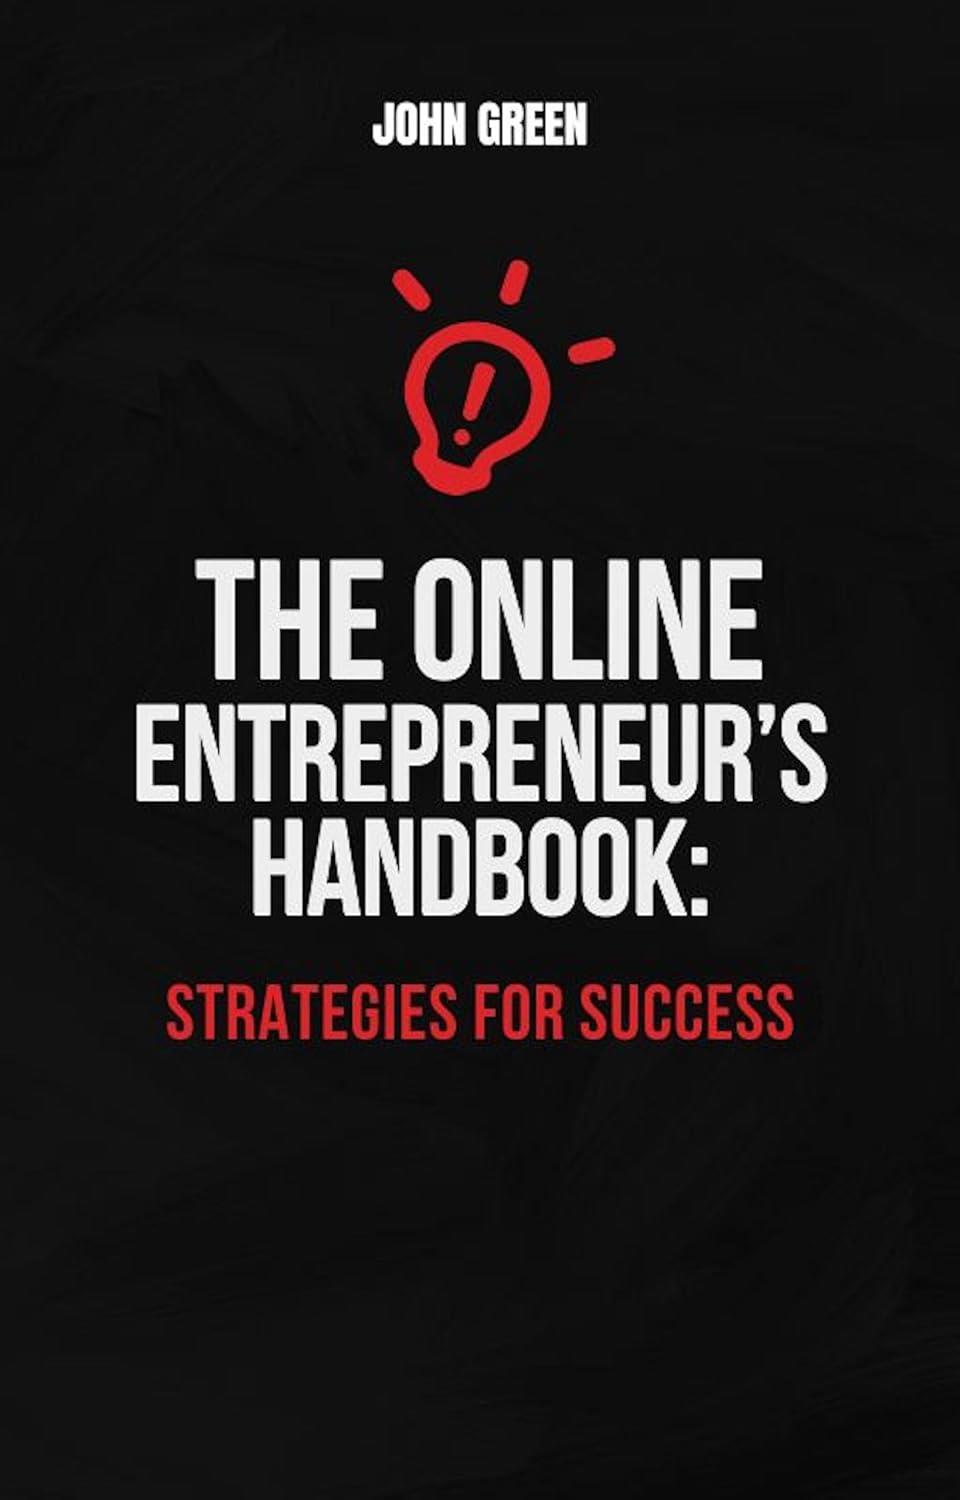 The Online Entrepreneur's Handbook